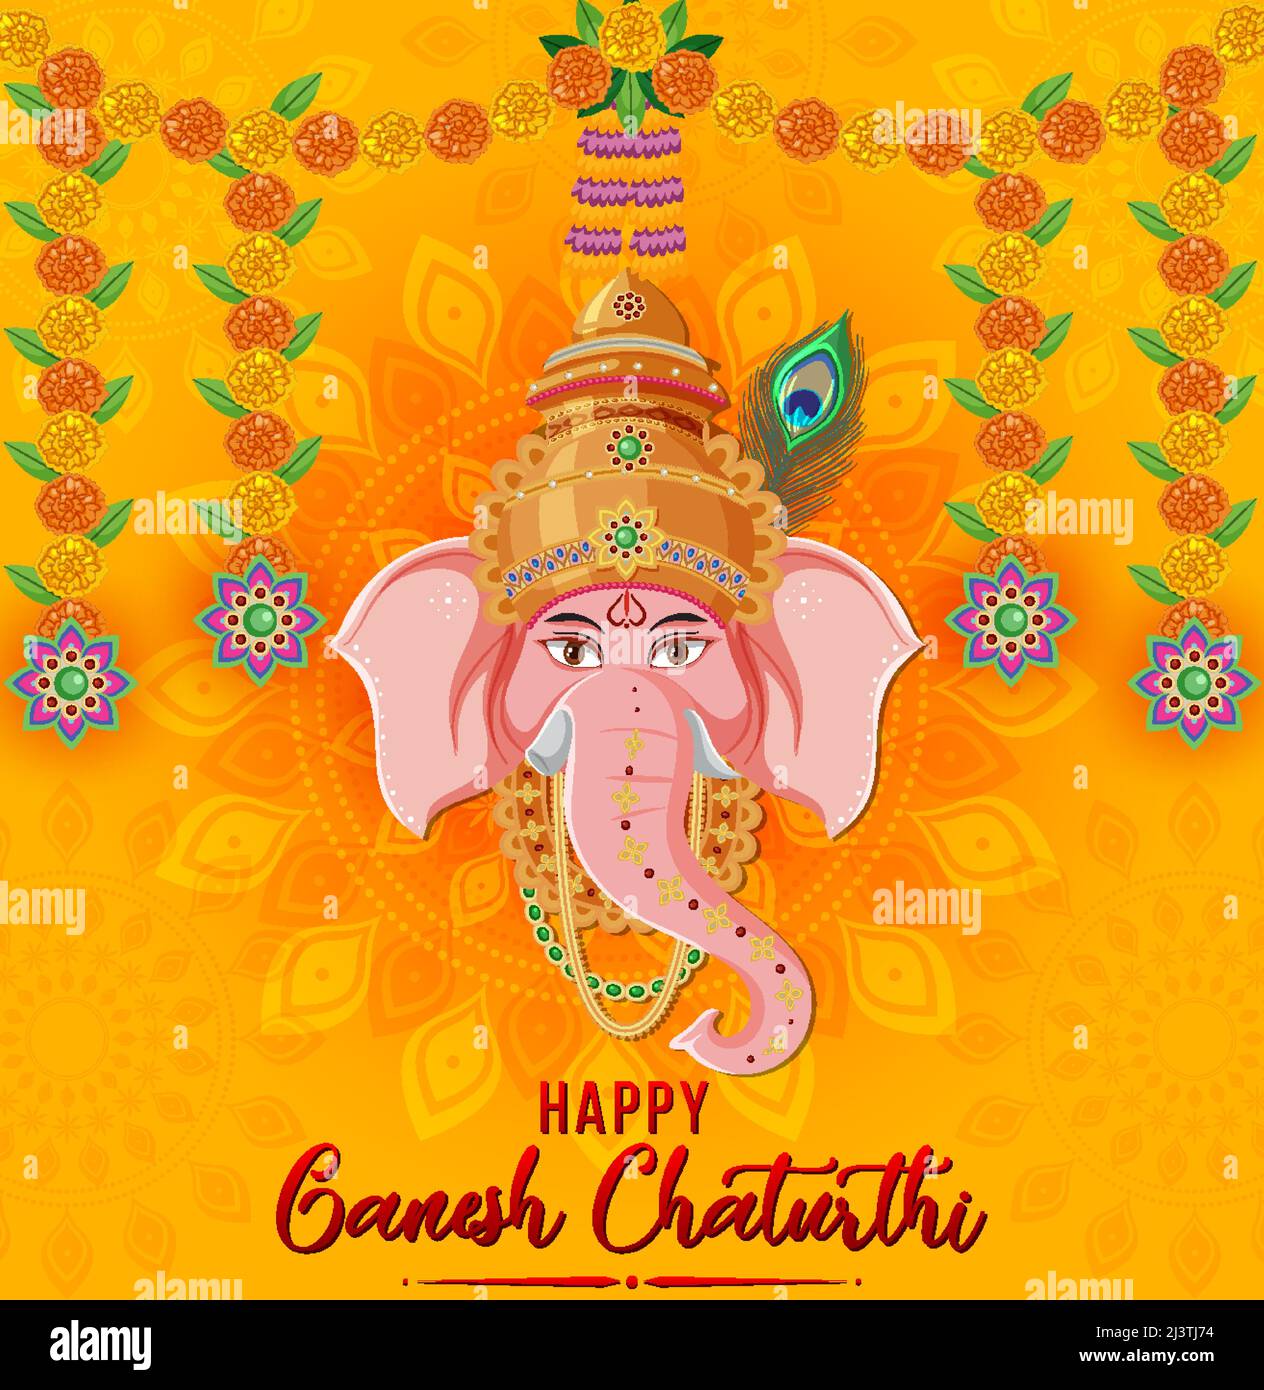 Happy Ganesh Chaturthi Poster illustration Stock Vector Image & Art - Alamy